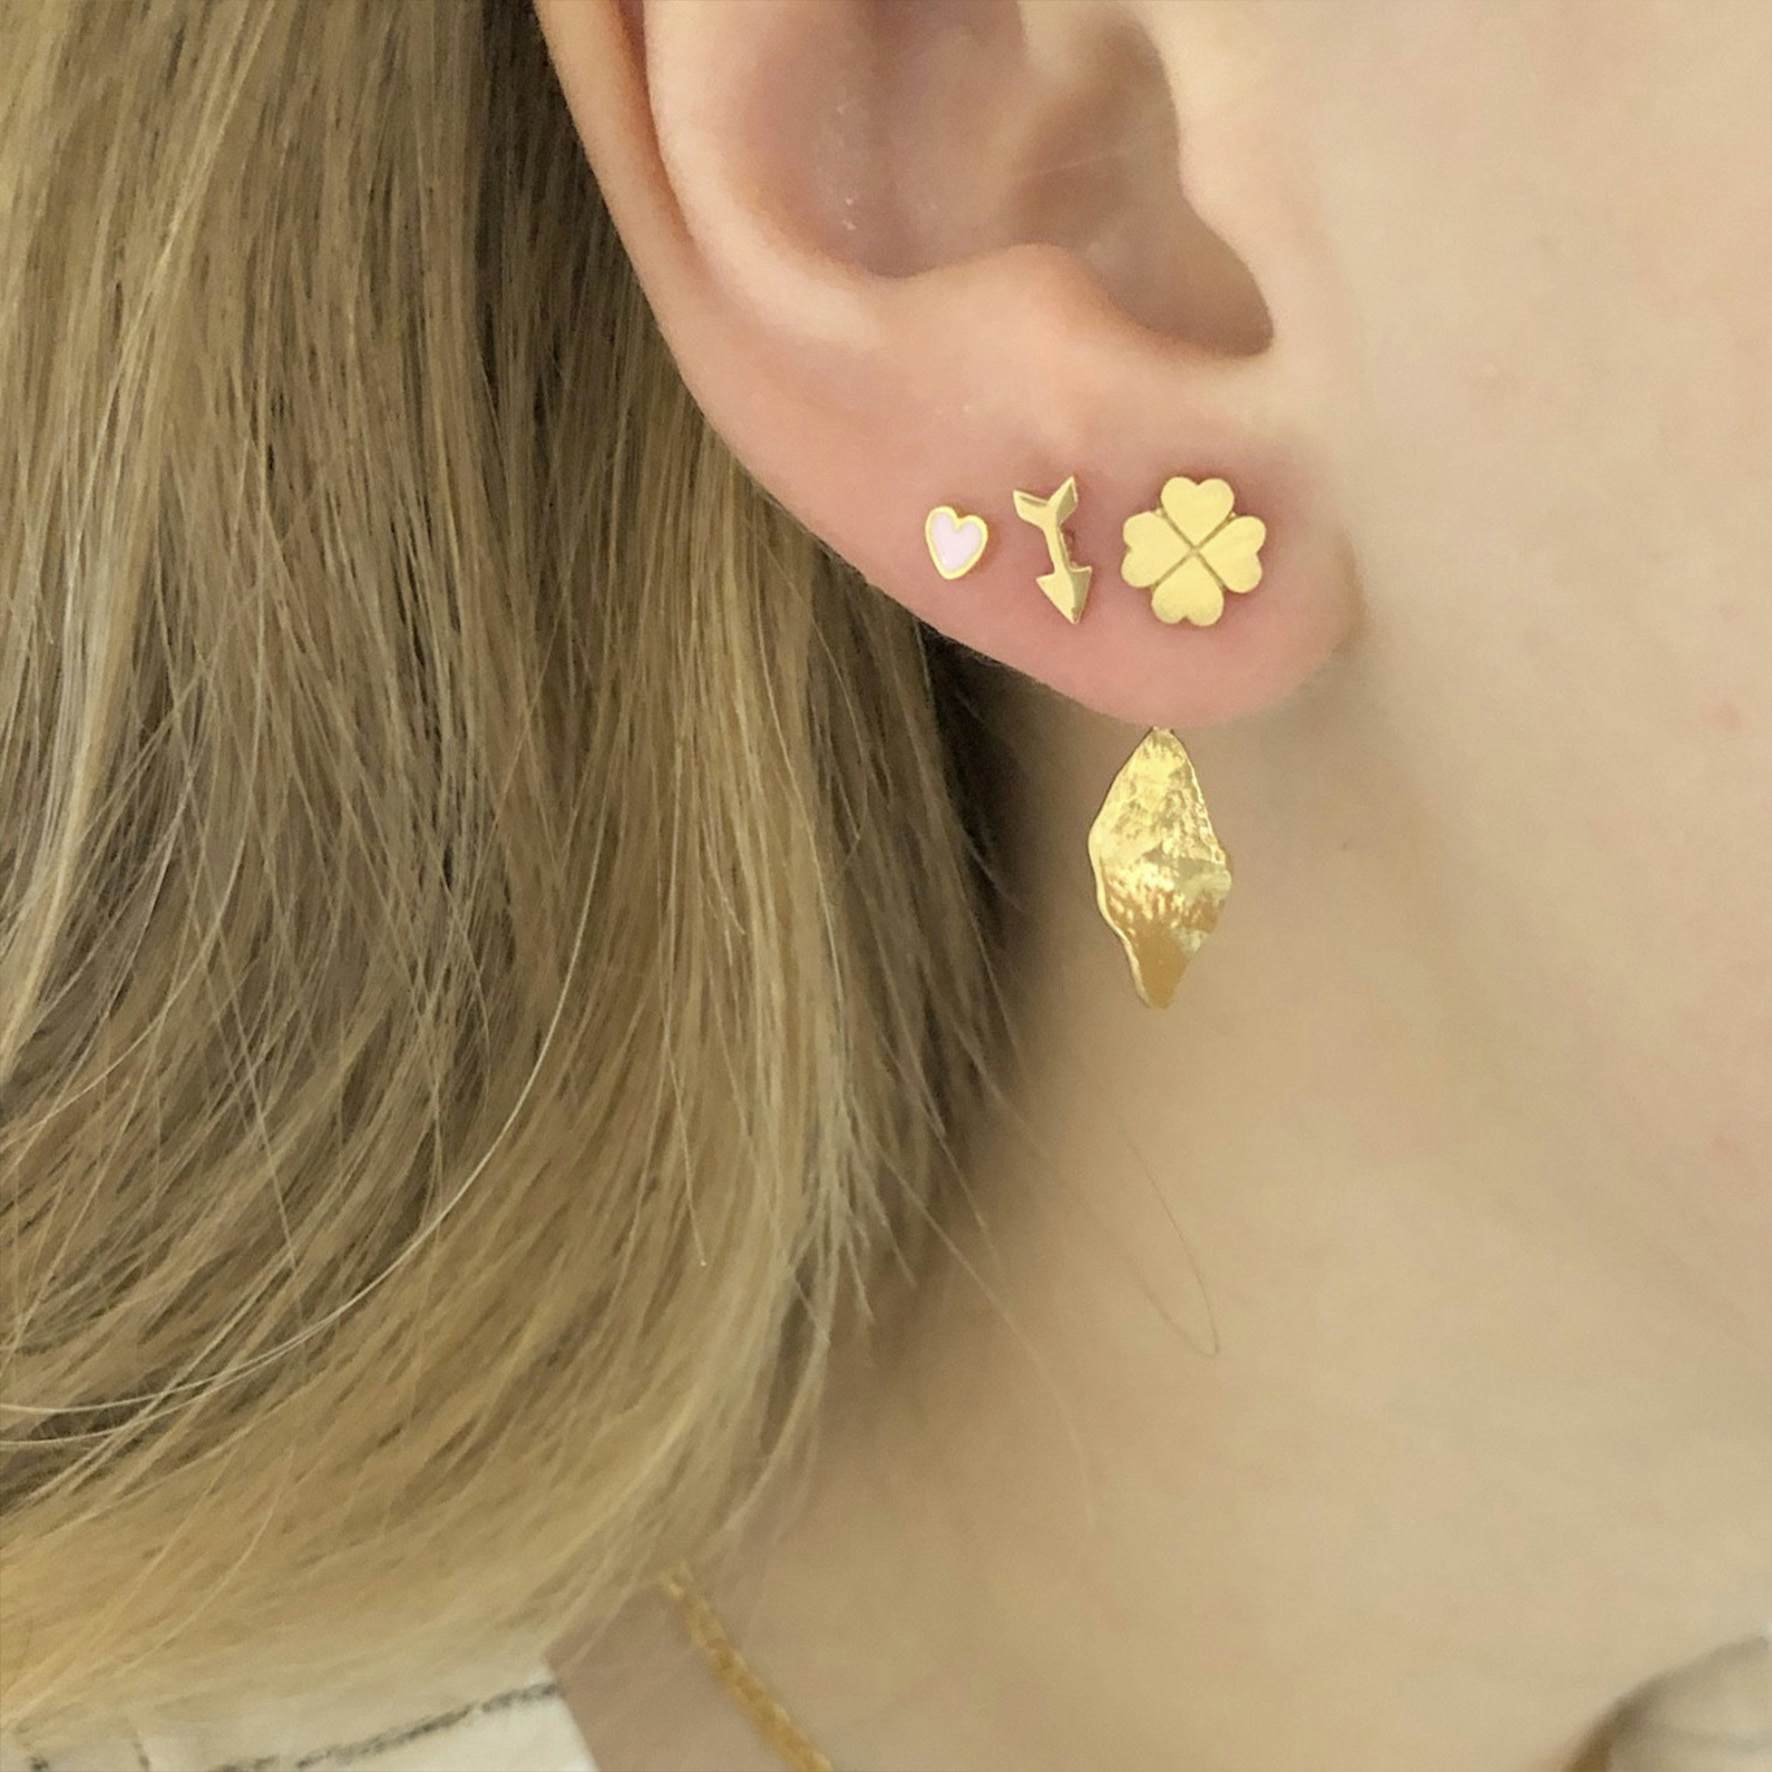 Ile De L'Amour Behind Ear Earring von STINE A Jewelry in Vergoldet-Silber Sterling 925